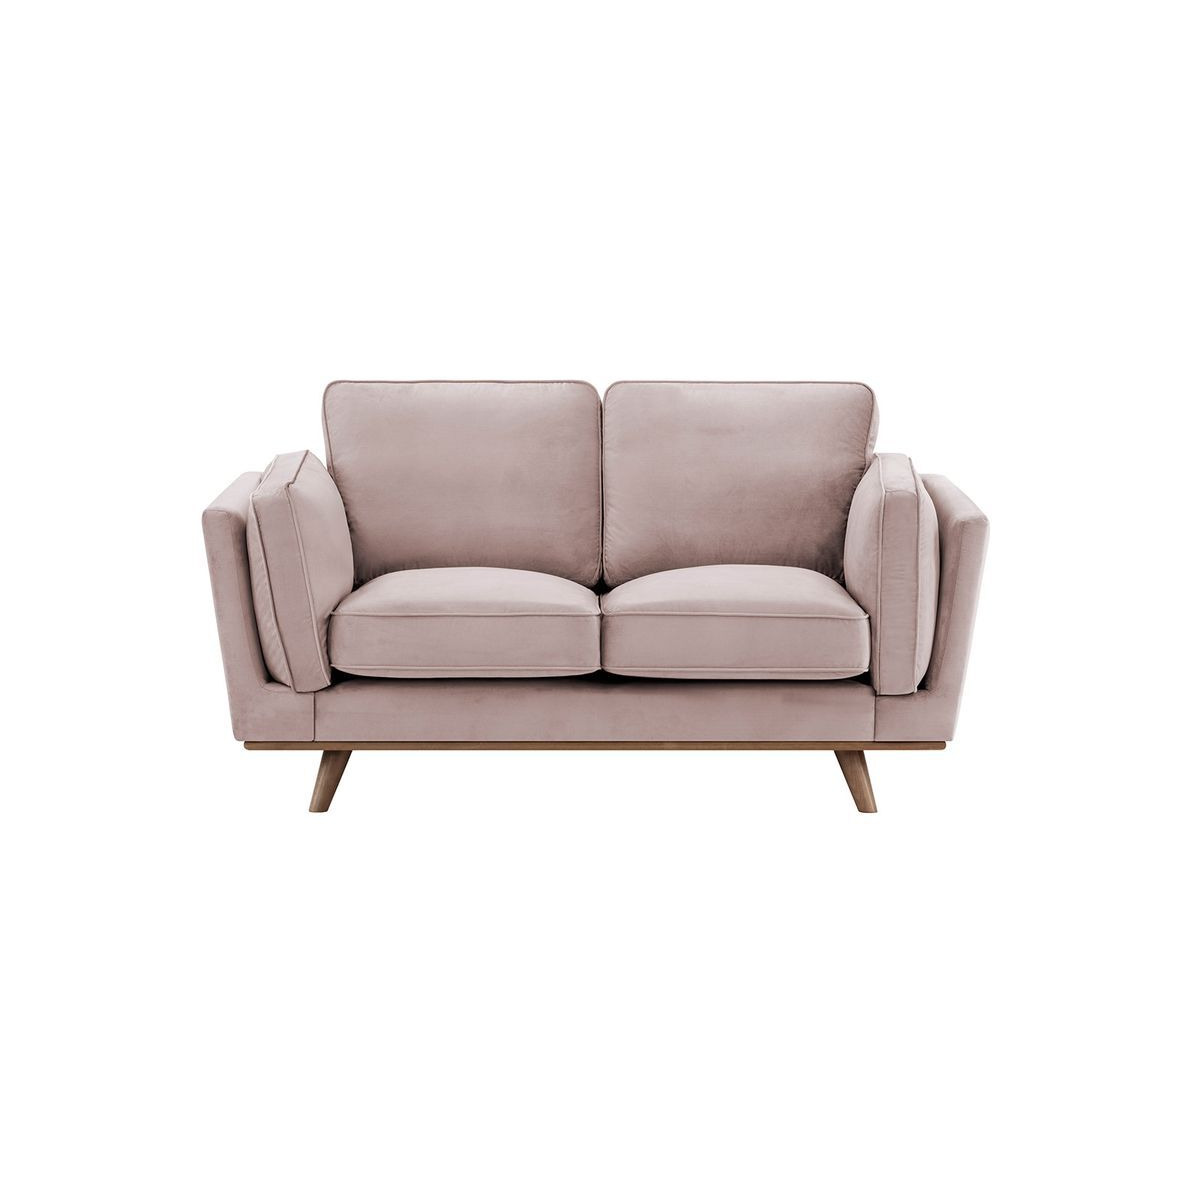 Gabrielle 2 Seater Sofa, lilac, Leg colour: aveo - image 1